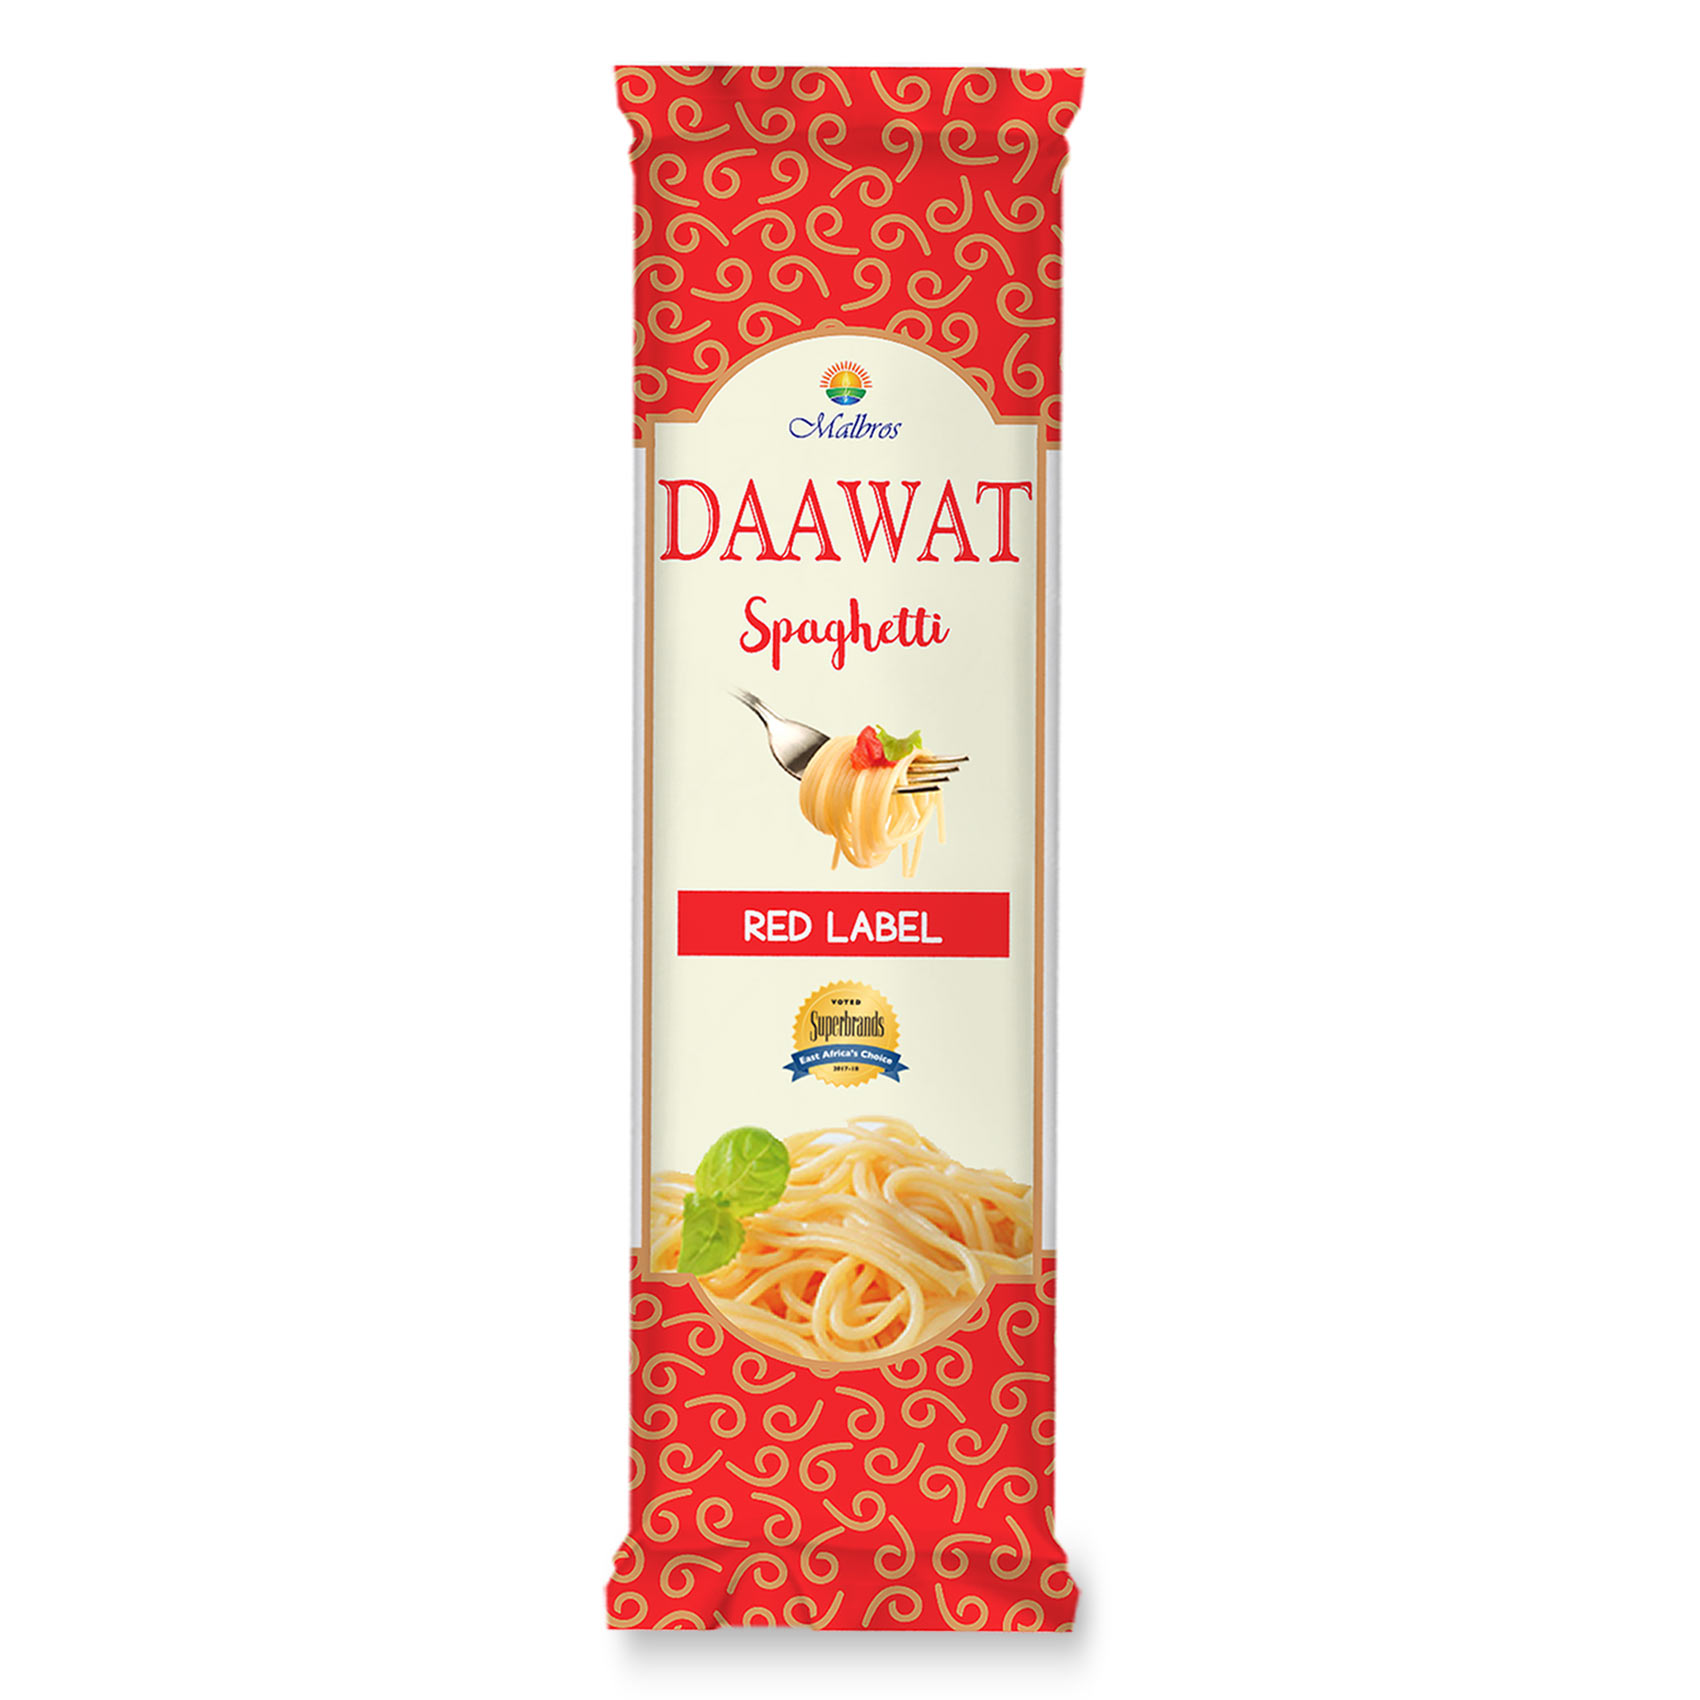 Daawat Spaghetti Red Label 400G